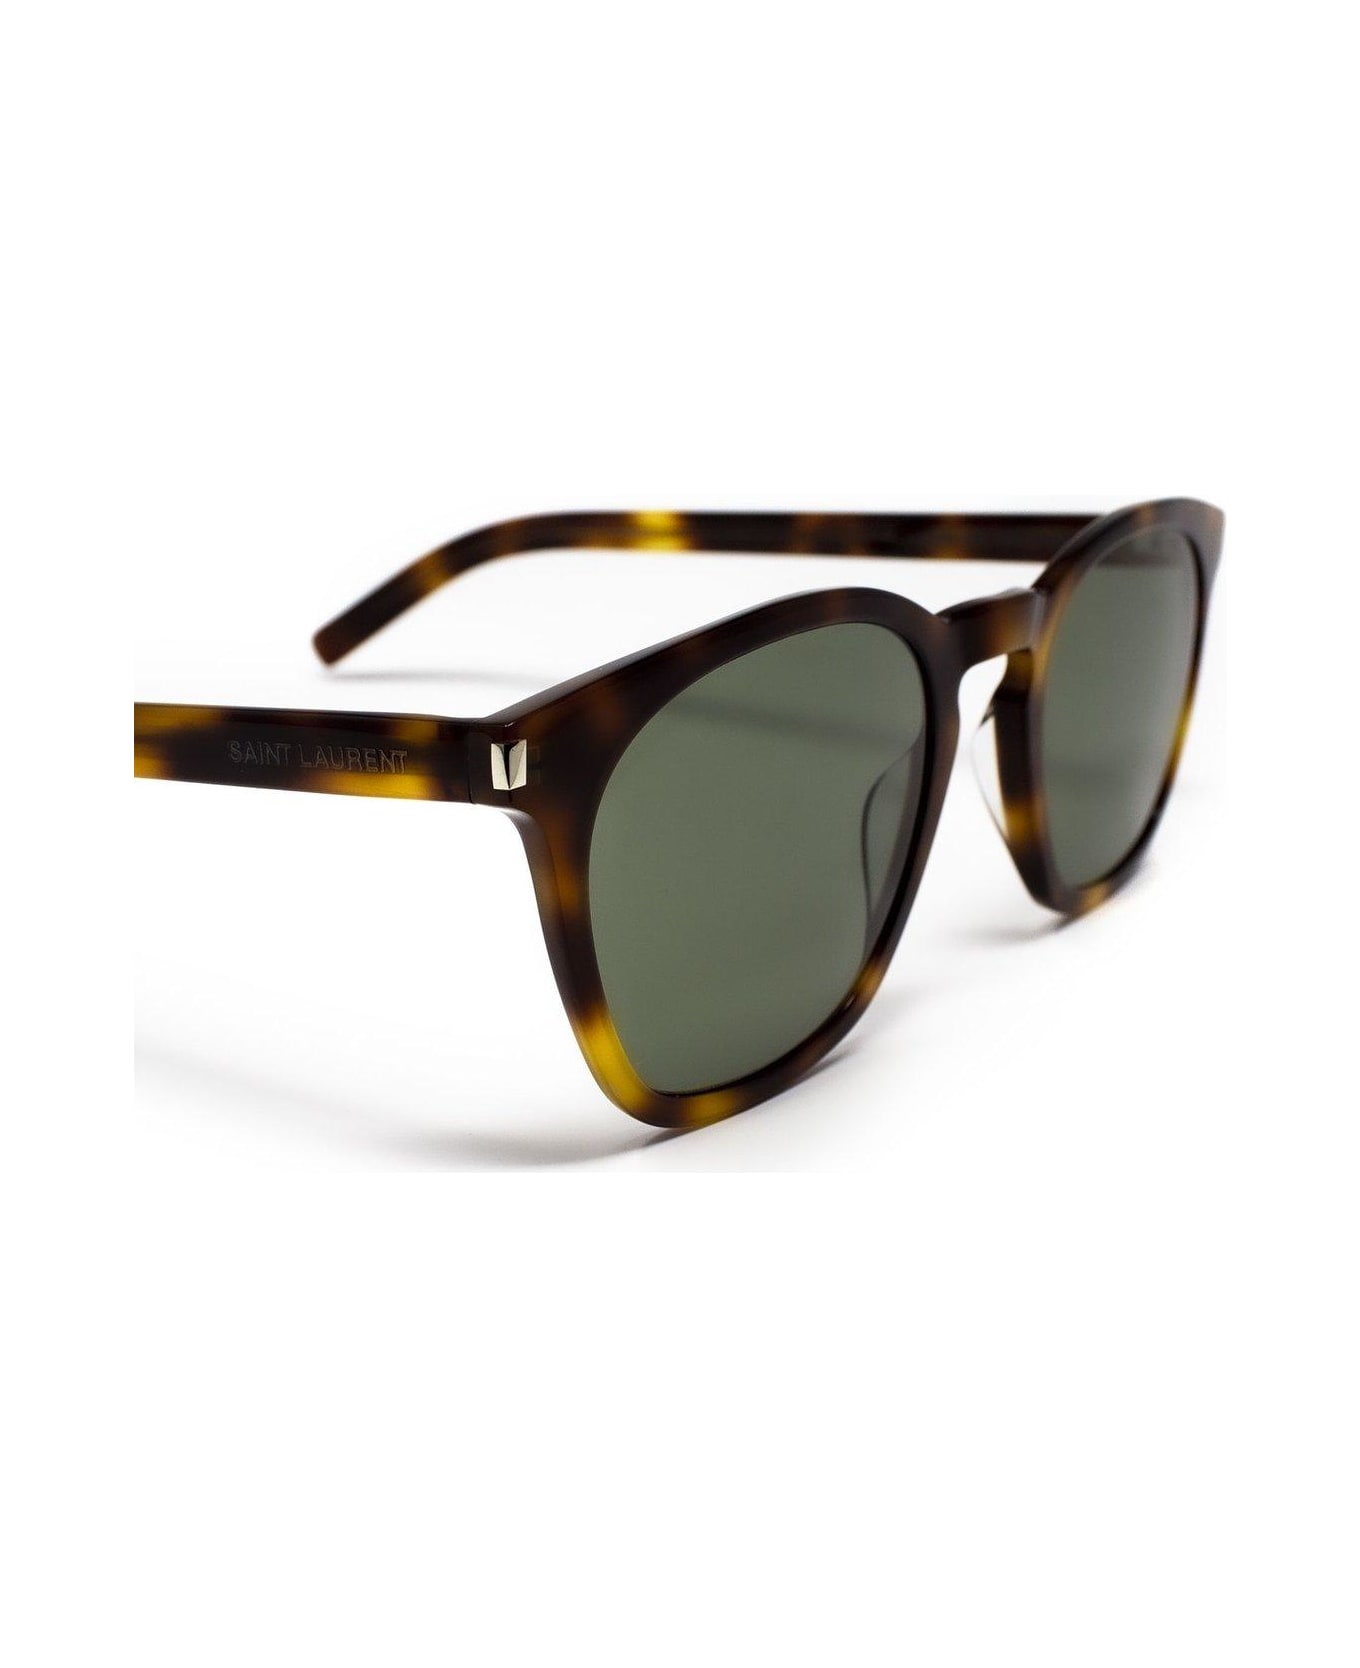 Saint Laurent Eyewear Wellington Sunglasses Sunglasses - 002 HAVANA HAVANA GREEN サングラス